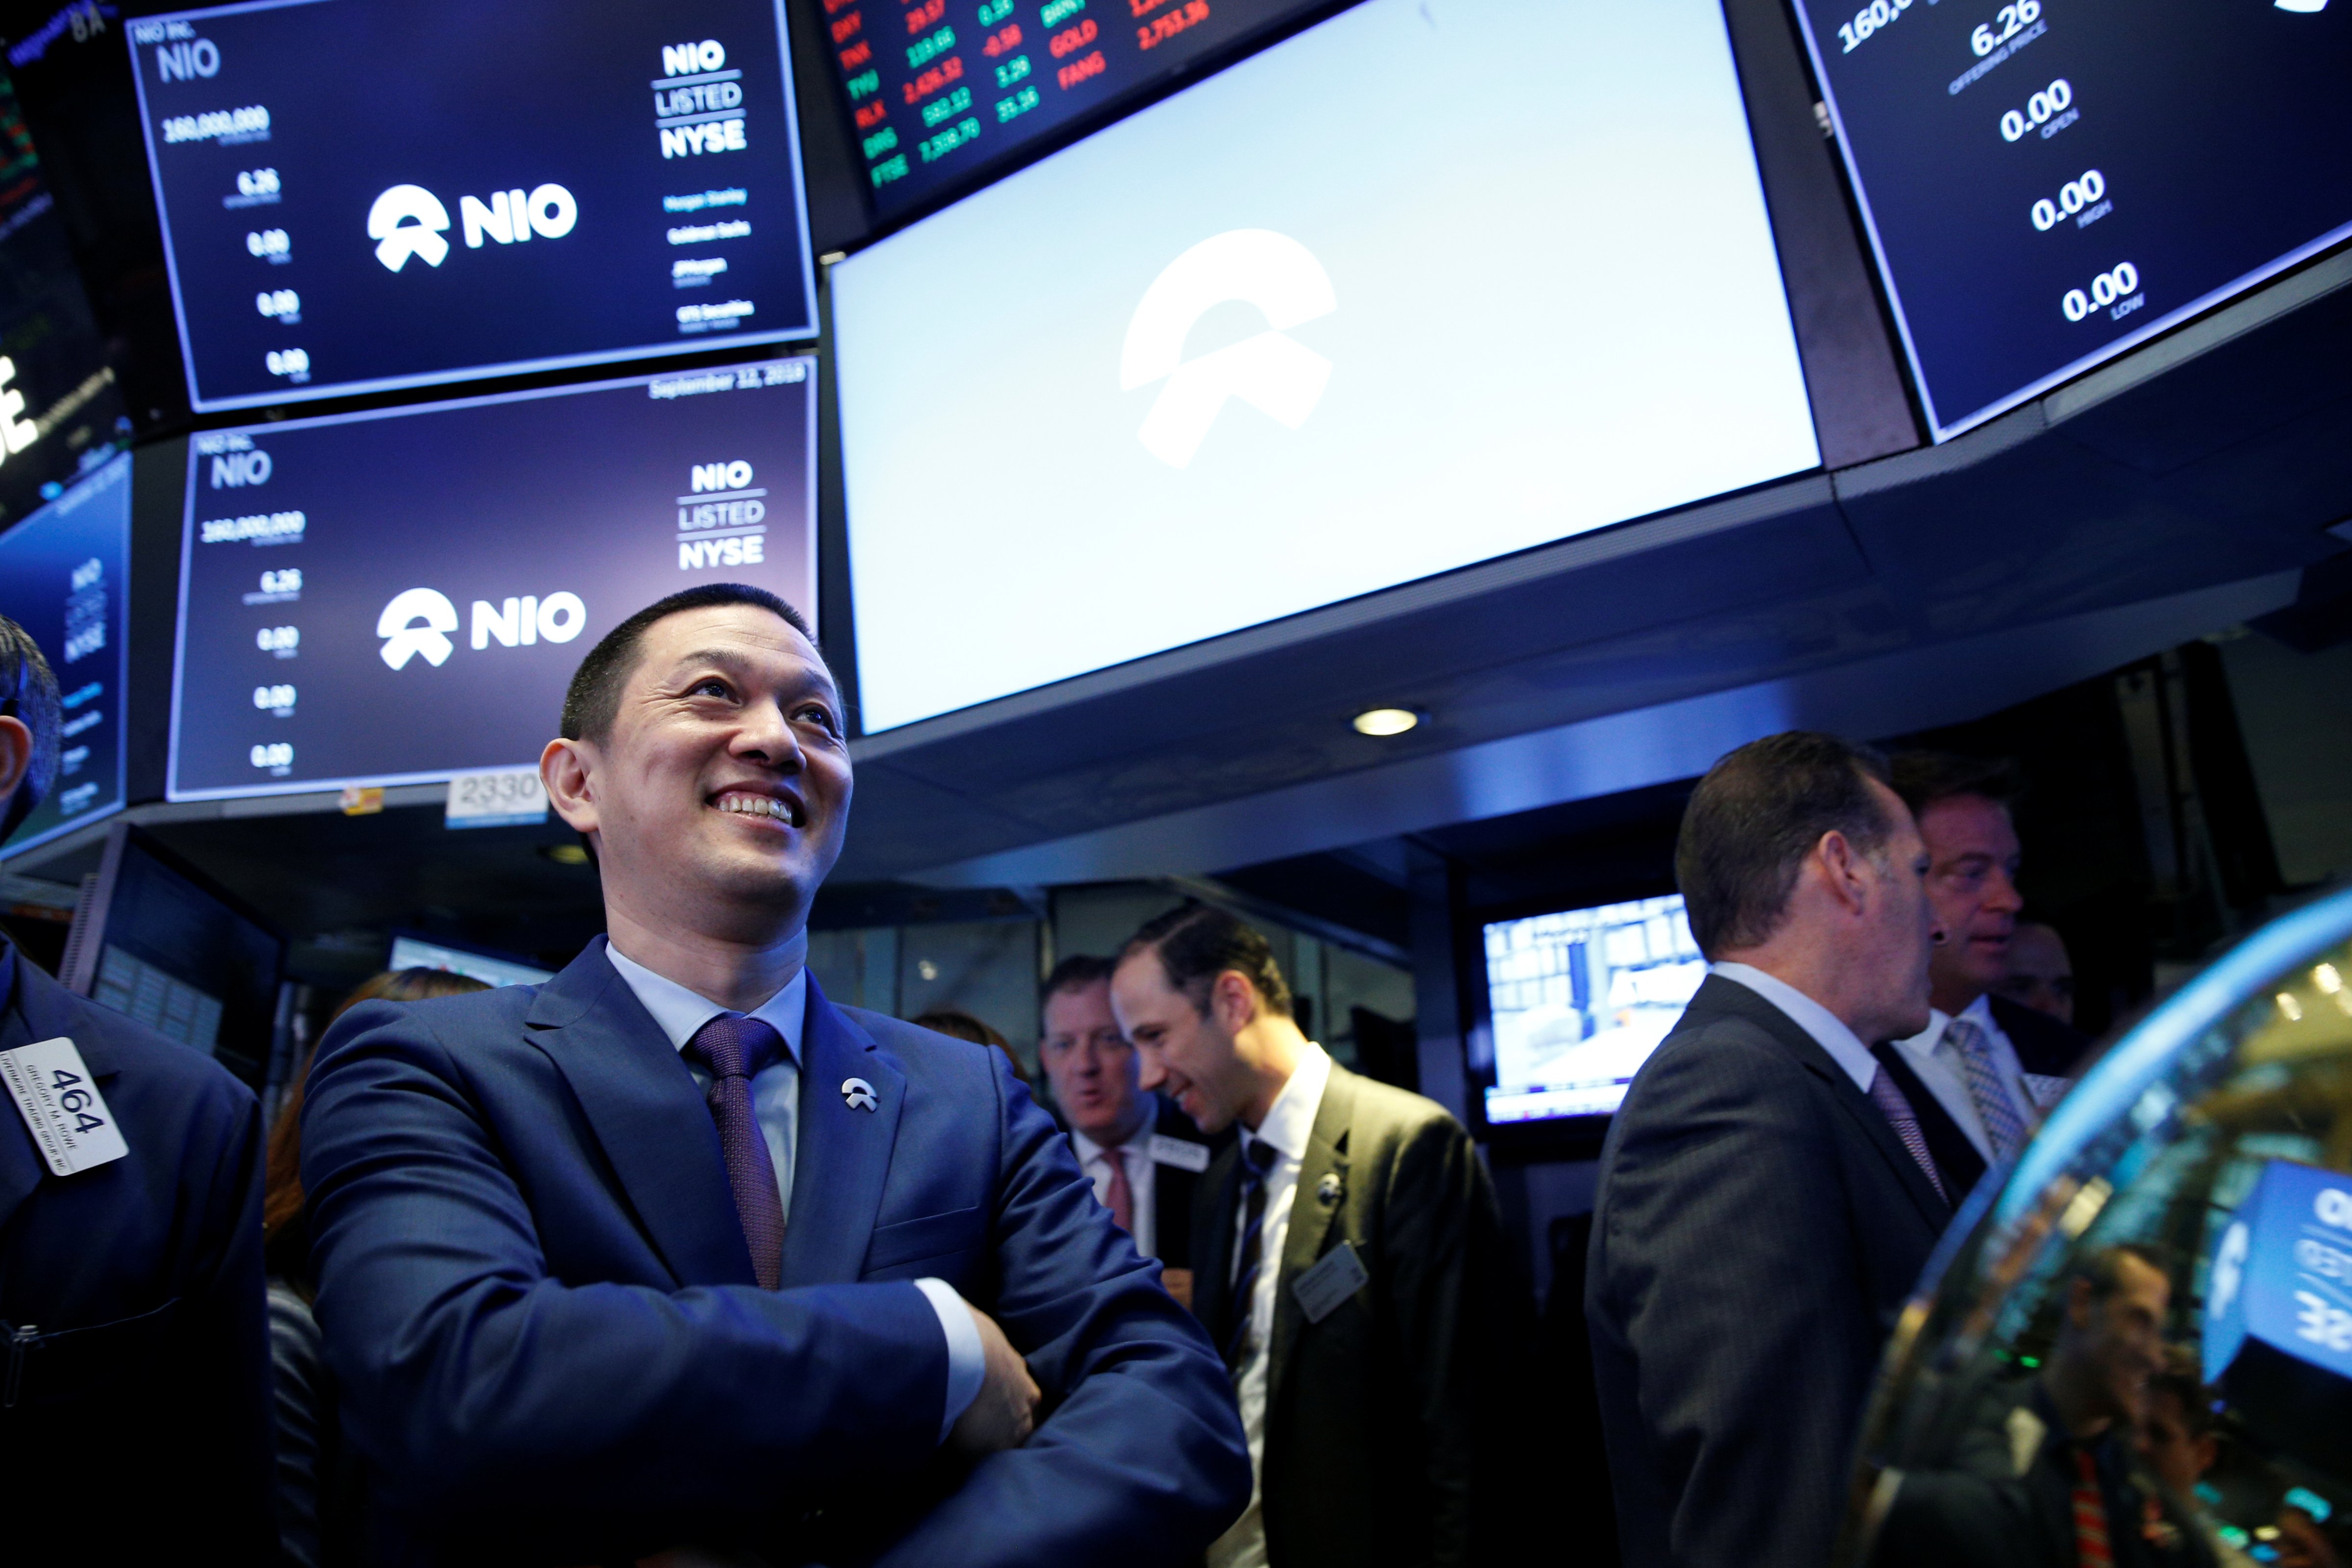 Bin Li, CEO of Chinese electric vehicle start-up Nio Inc., celebrates the companys initial public offering (IPO) at the NYSE in New York